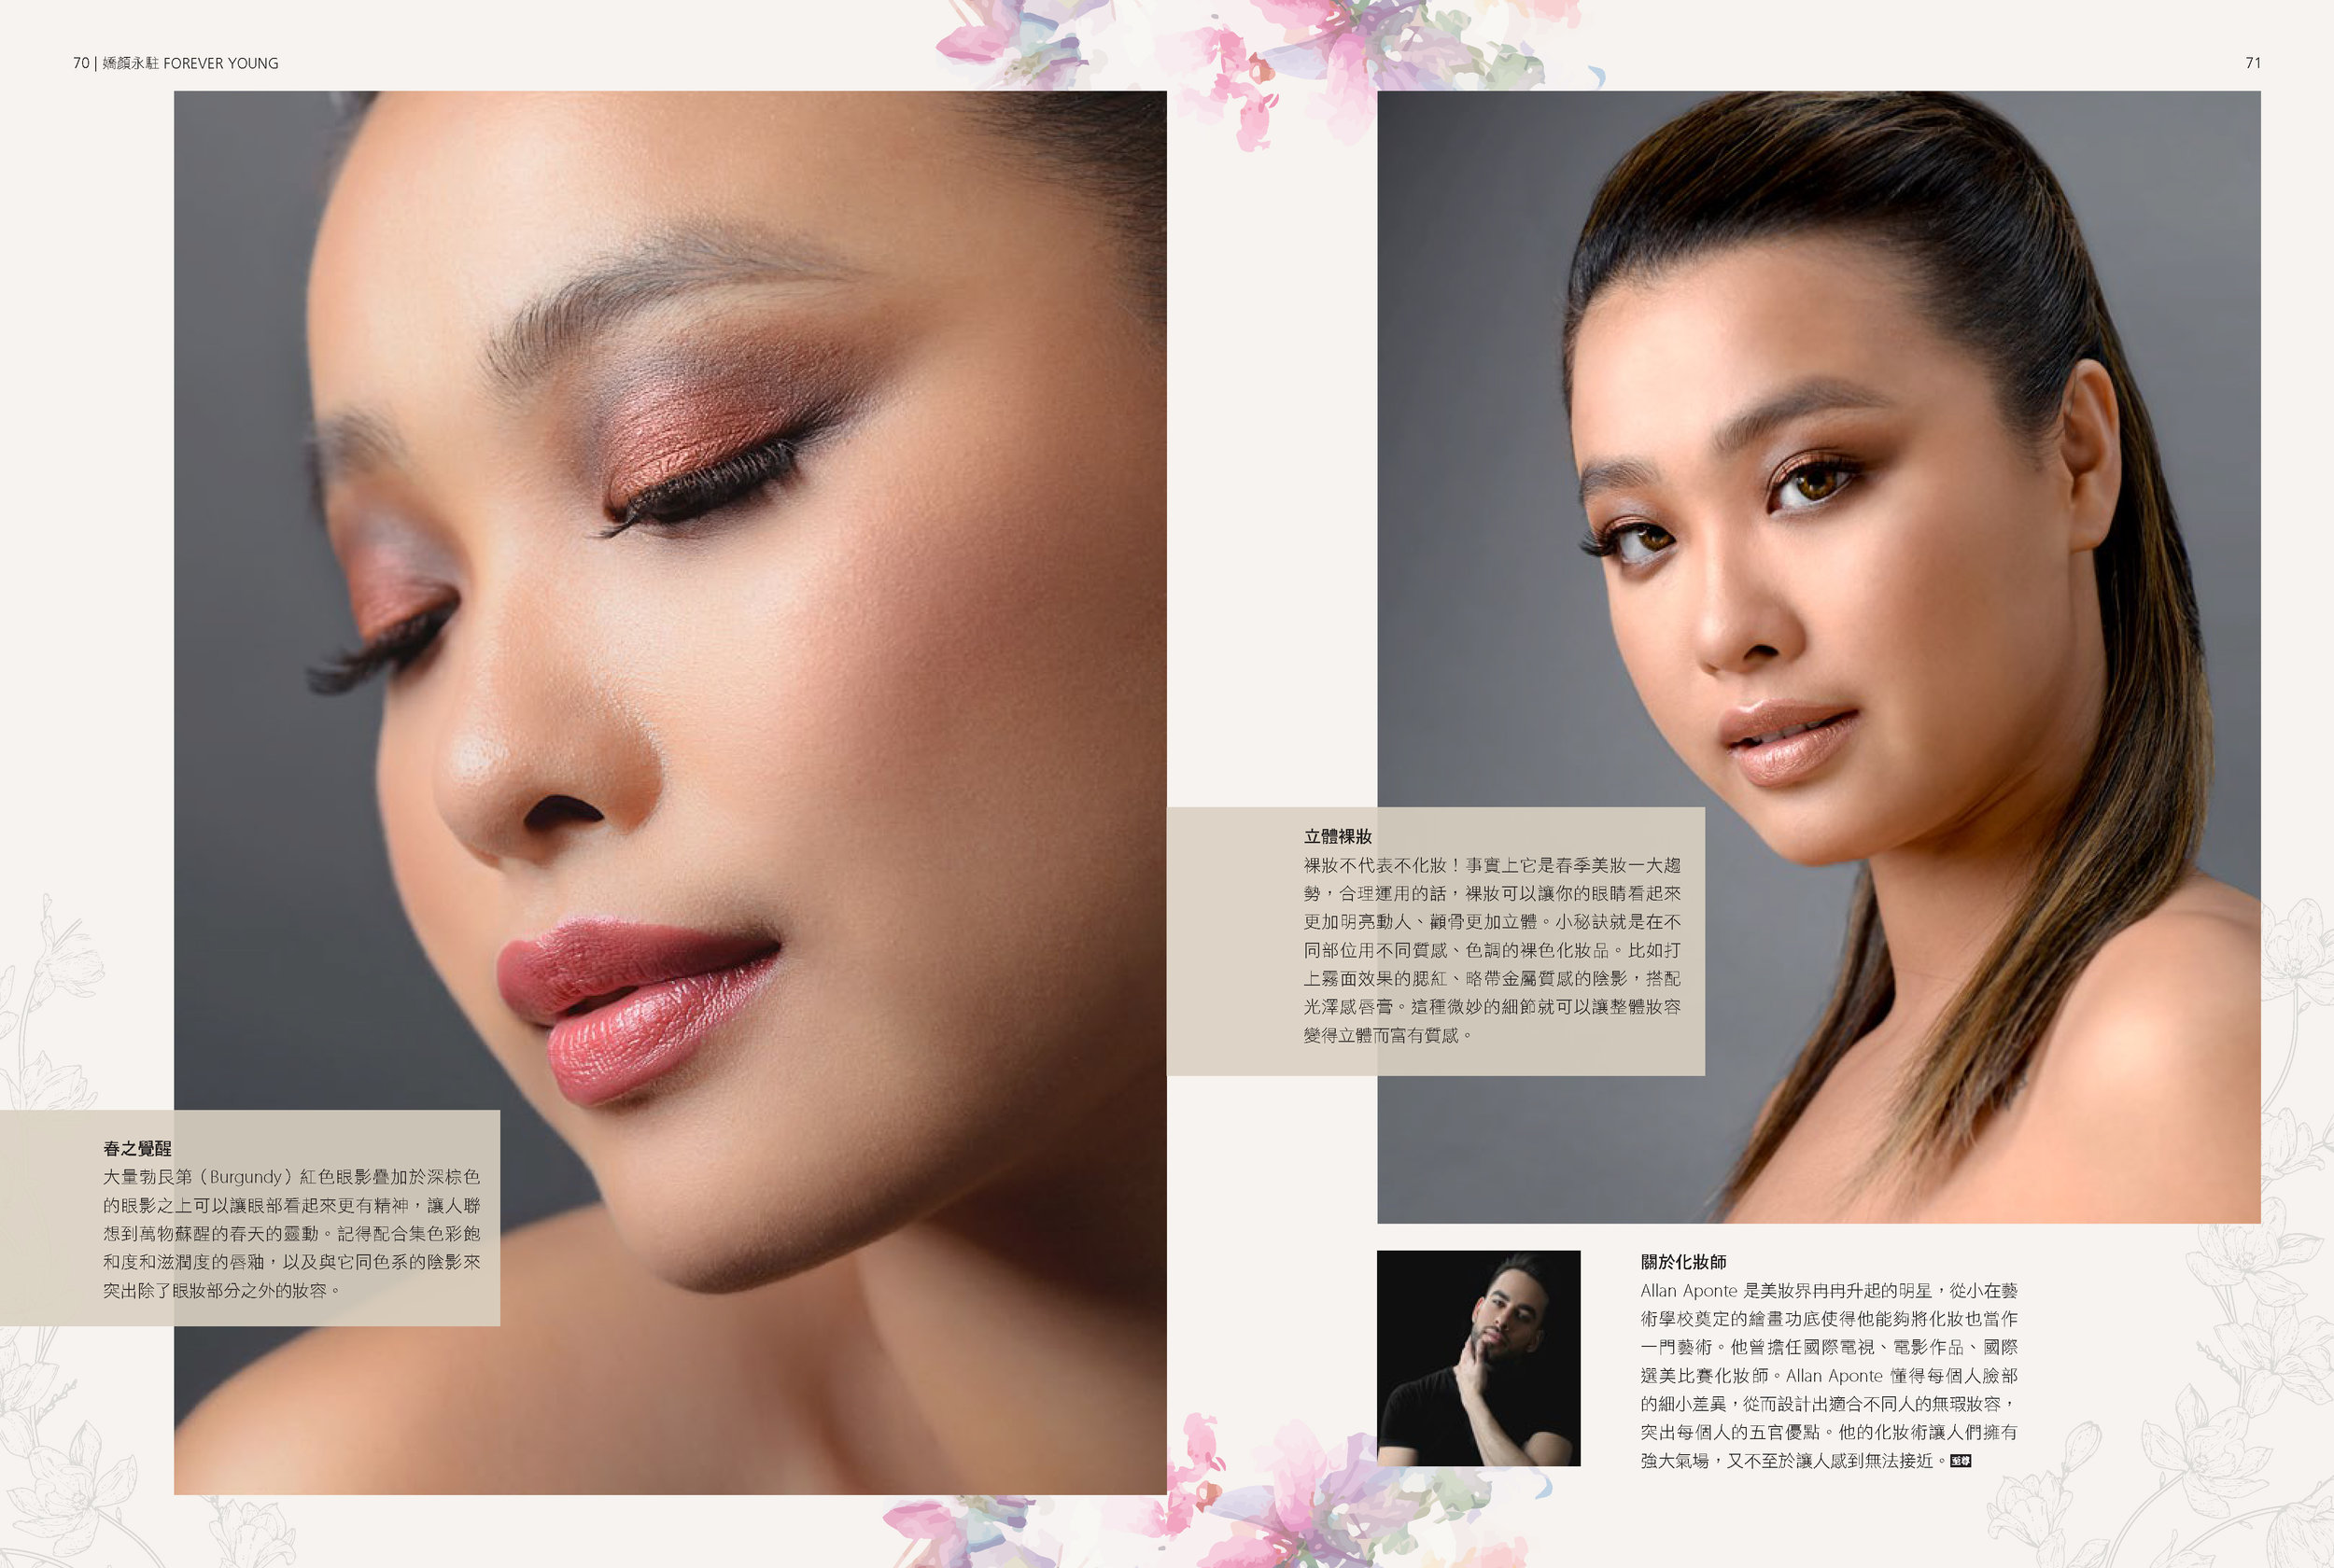 Pure Luxury Magazine - MarApr 2019-Makeup by Allan Aponte, photos by Andrew Werner 2.jpg